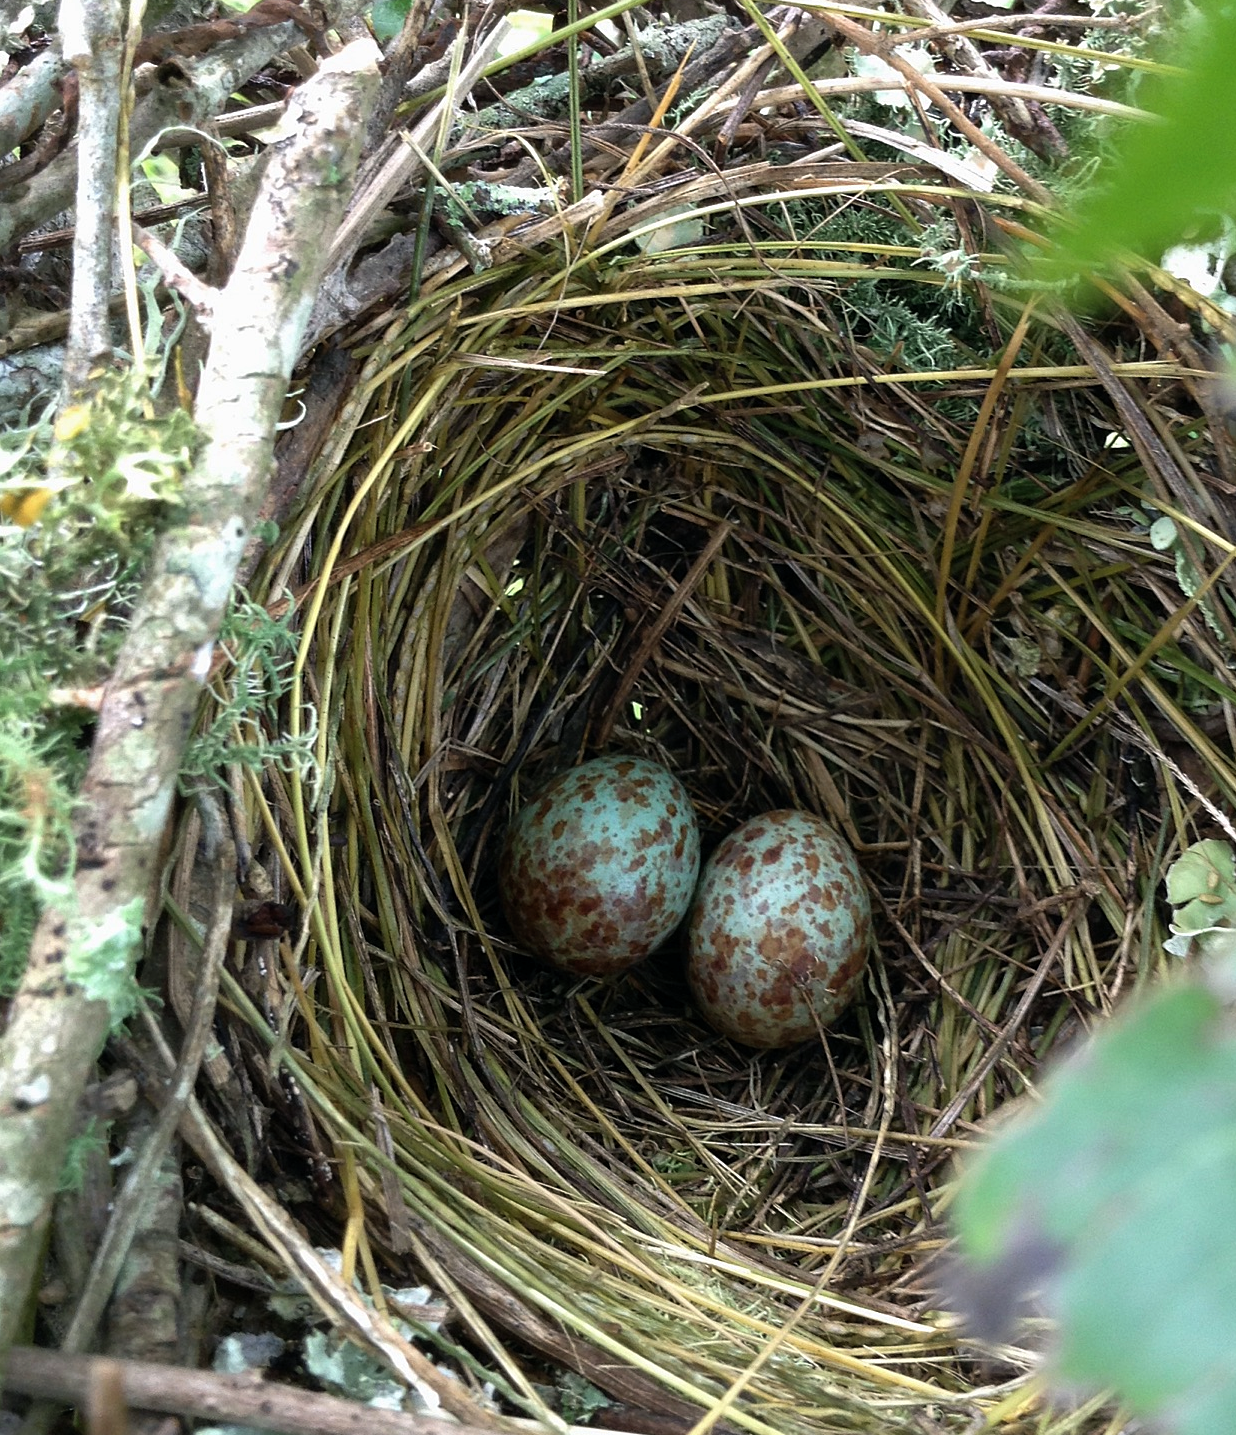 Mockingbird Nest